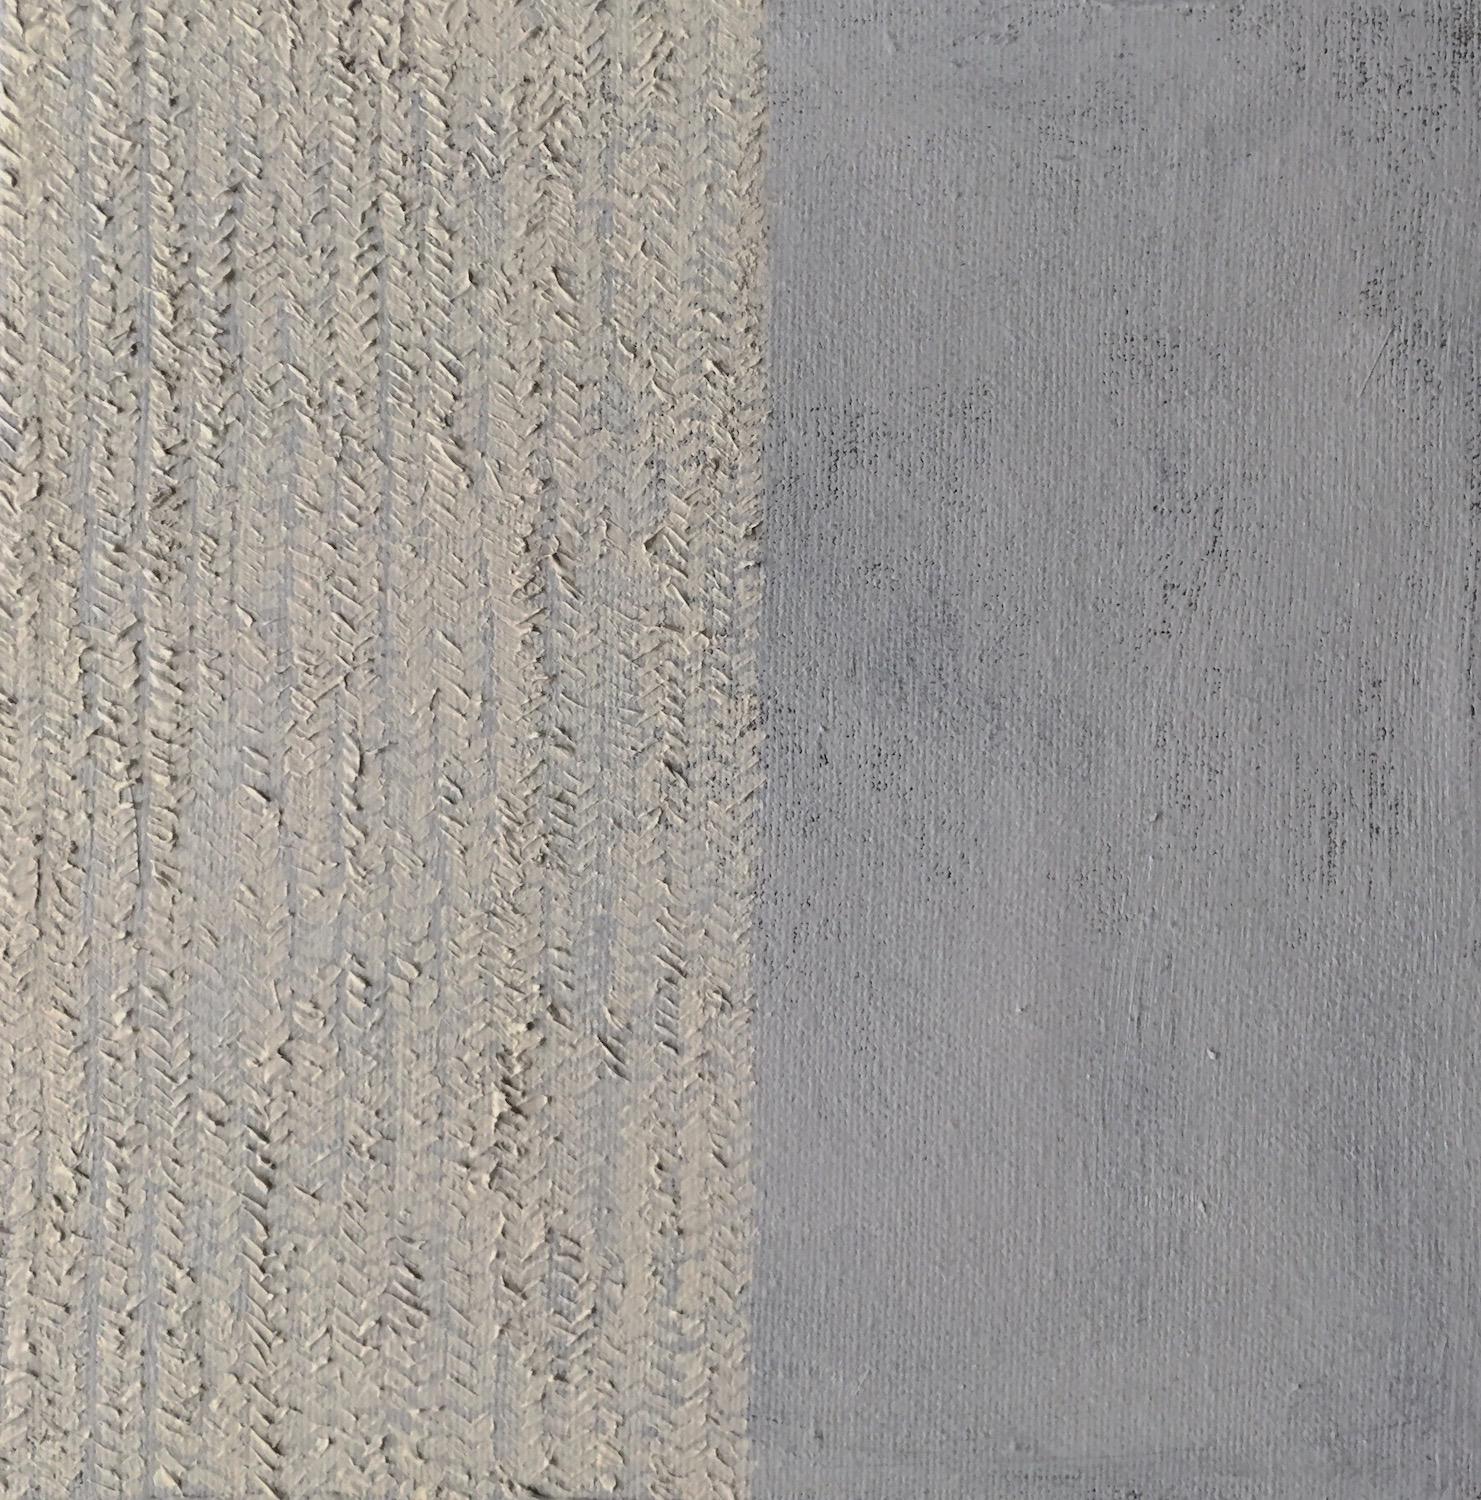 Andrea Stajan-Ferkul Abstract Painting – Untitled (Abstract 20) Minimal, strukturiert, grau, beige, neutral